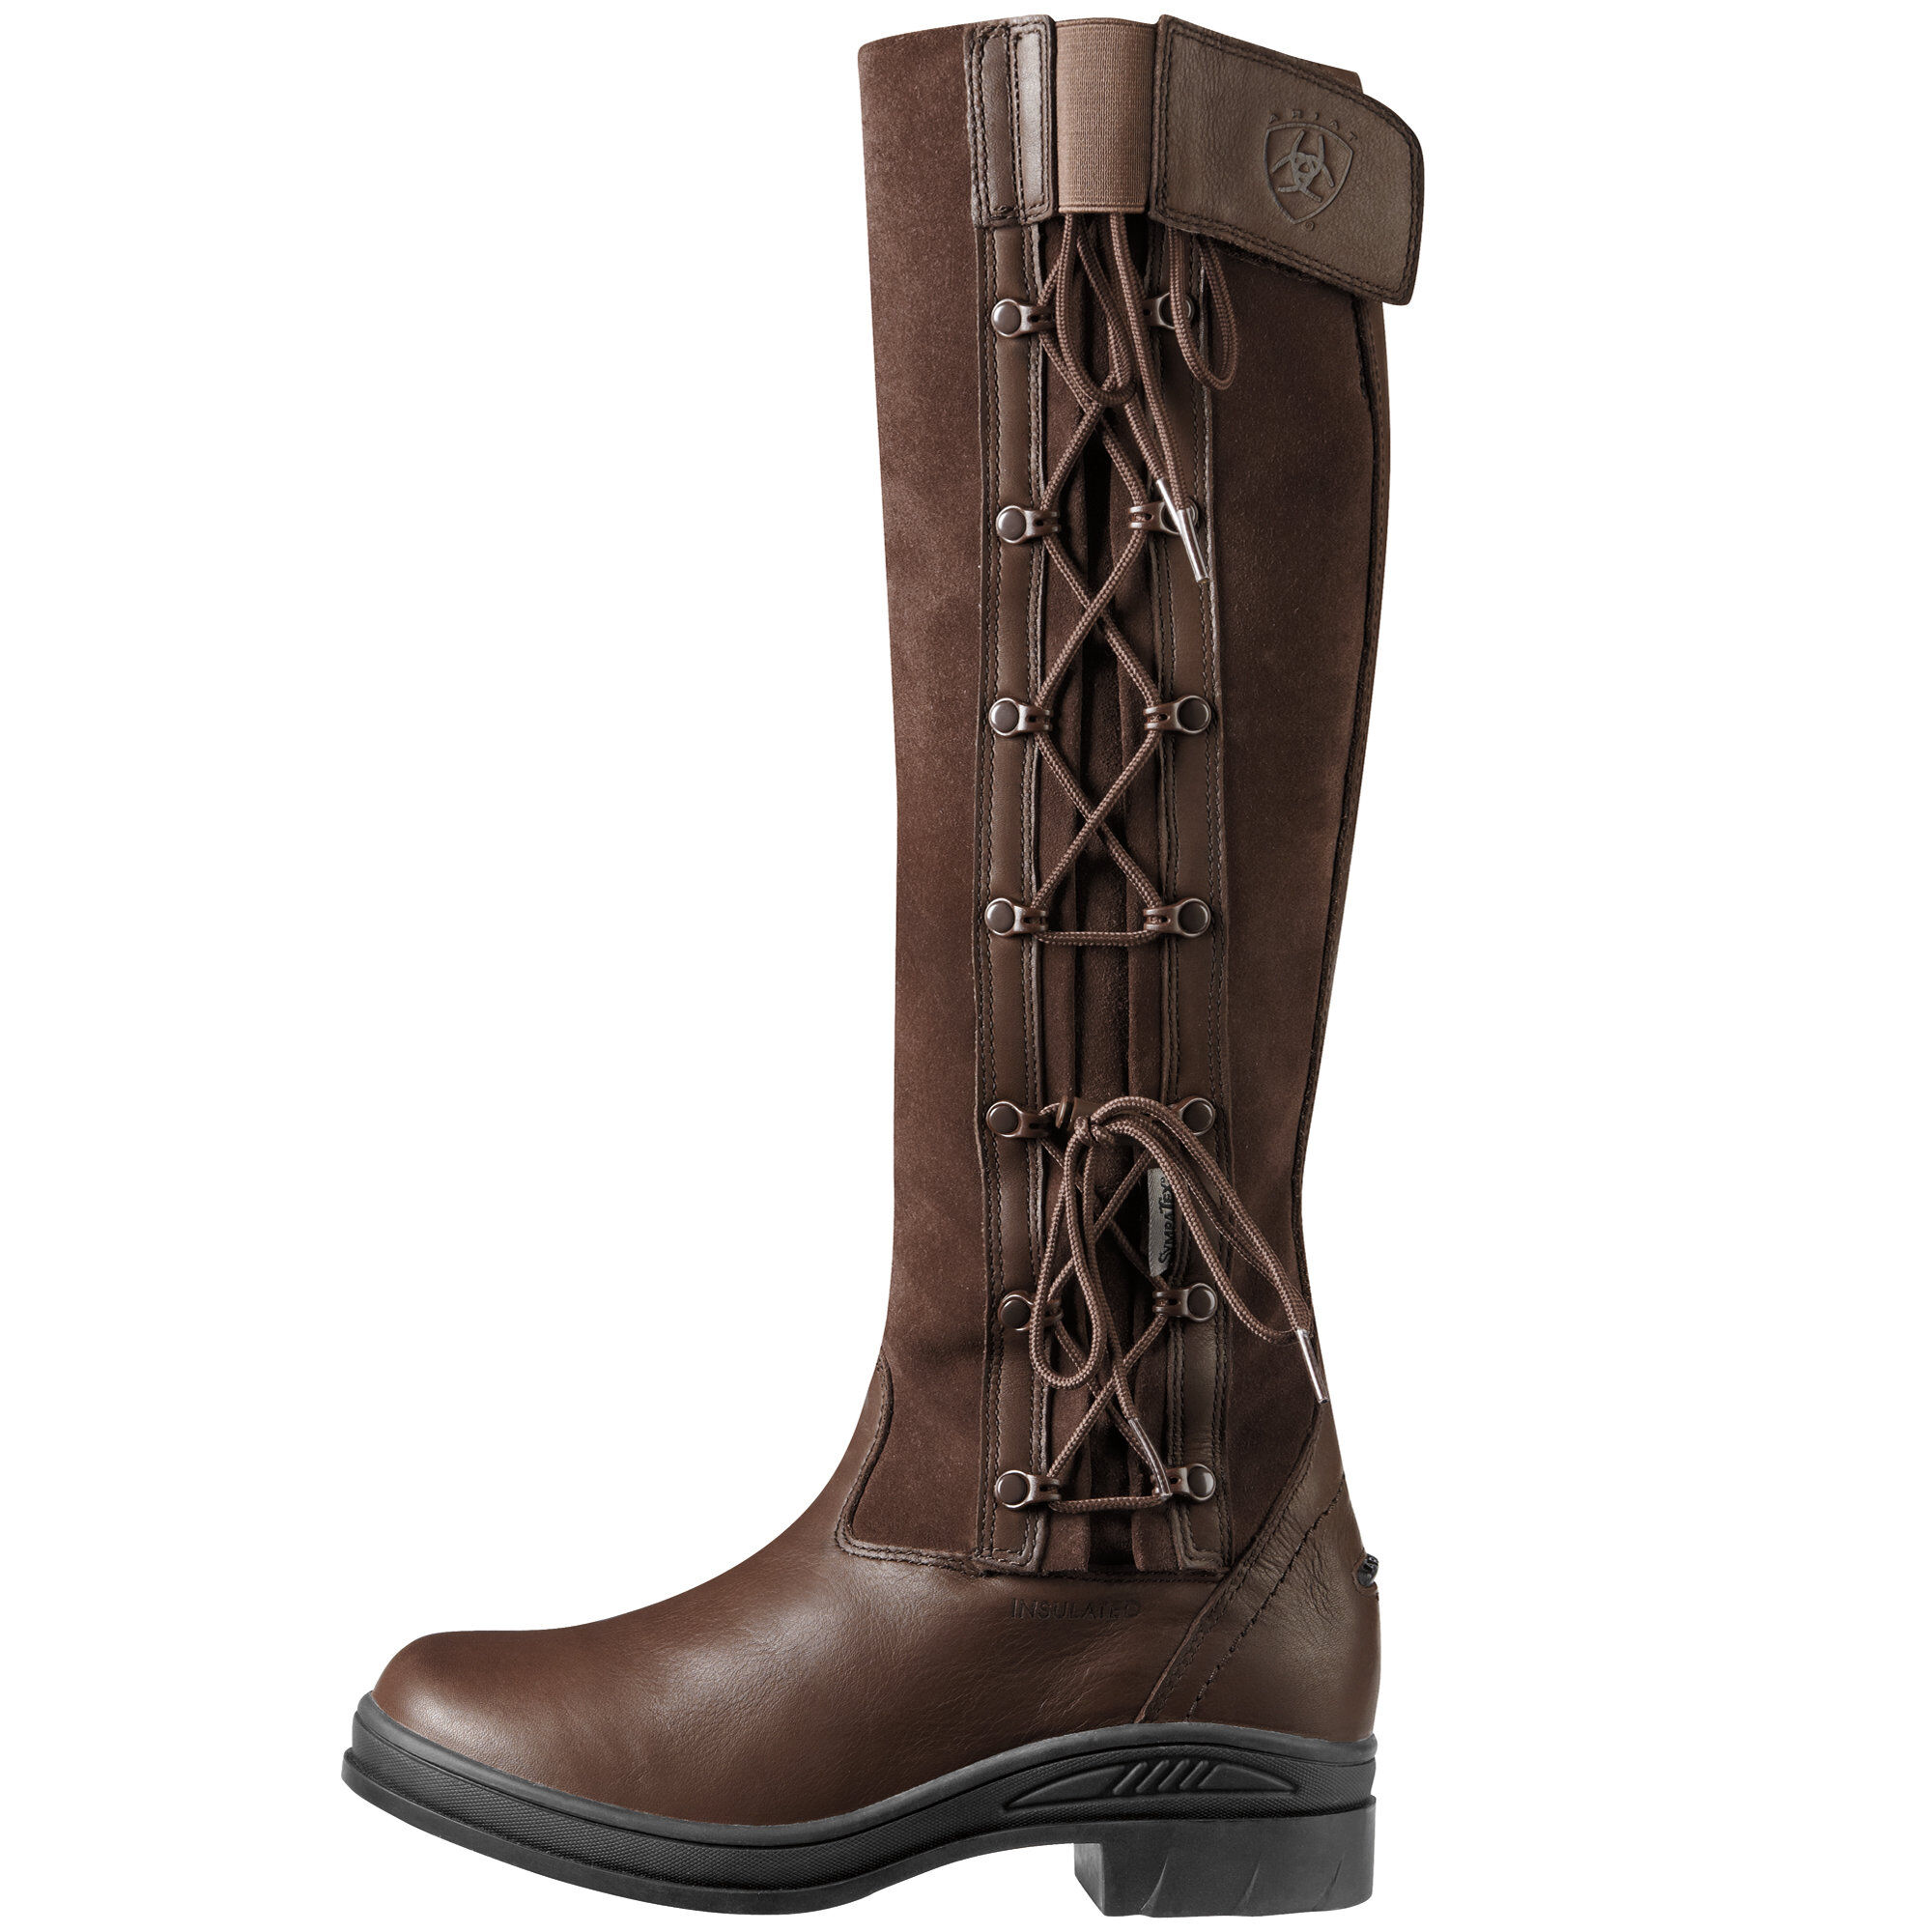 Ariat ARIAT  Grasmere boots size 8 